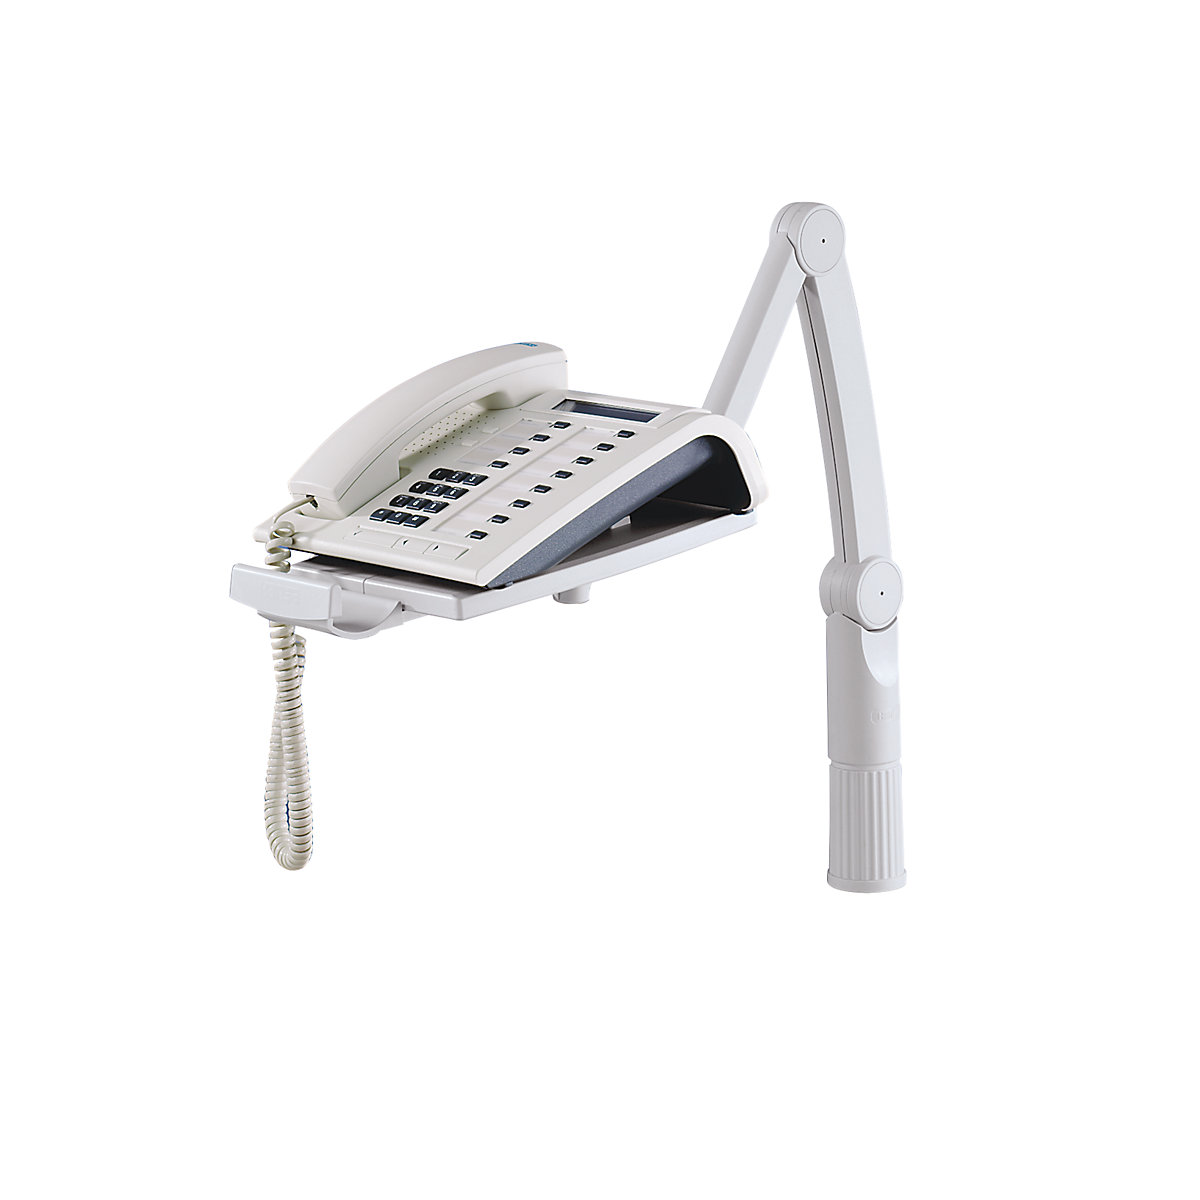 Telephone swivel arm, rotates 360°, light grey, order quantity 2 +-1